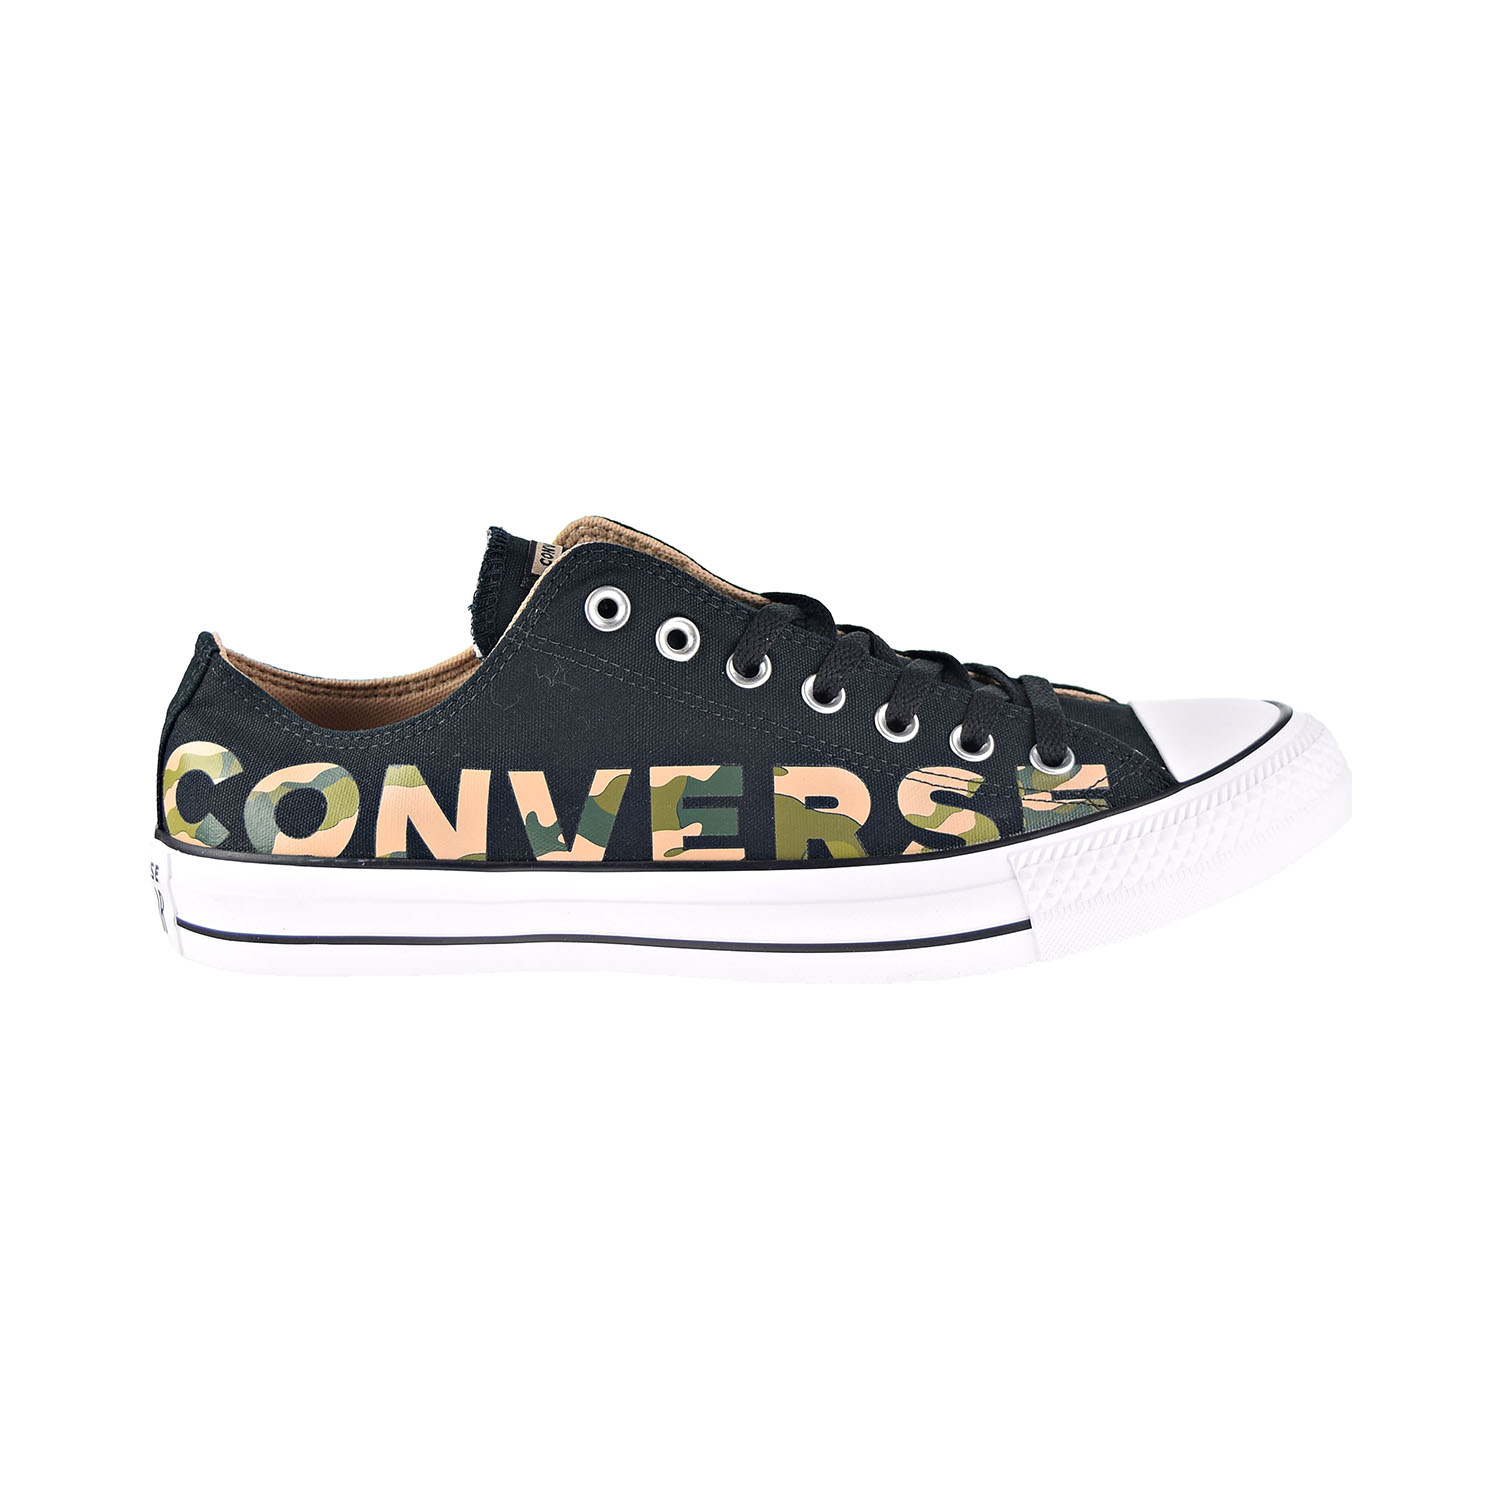 Converse Chuck Taylor All Star Ox "Camo Print" Men's Shoes Black-Multi-White 166234f - image 1 of 6